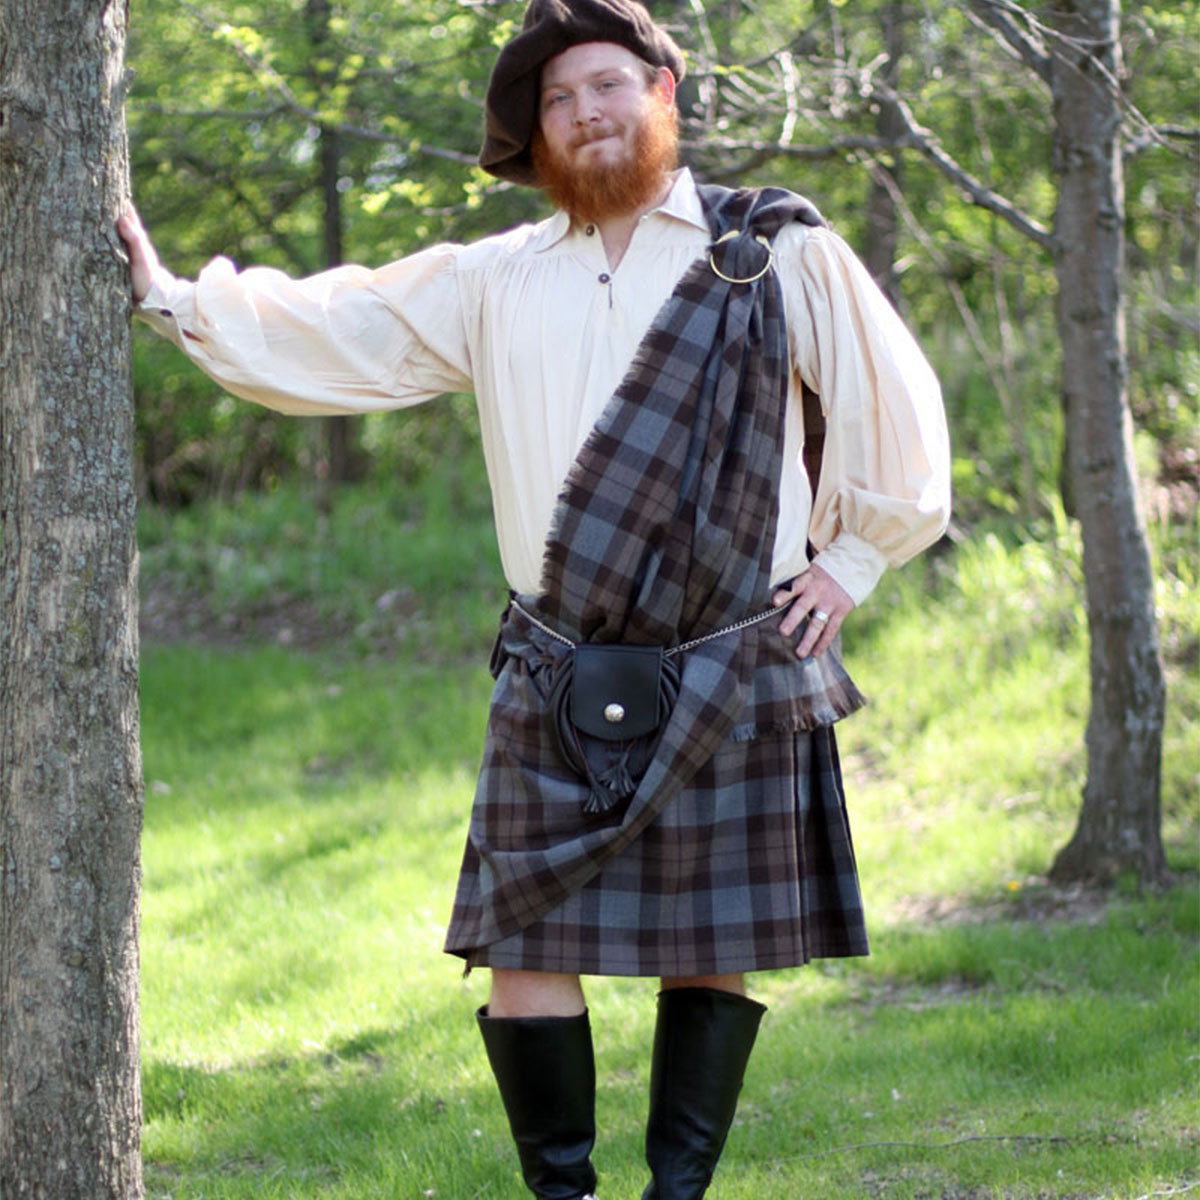 An ancient Irish Tartan Ancient Kilt - Homespun Wool Blend-clad man leaning against a tree, wearing an Irish tartan.